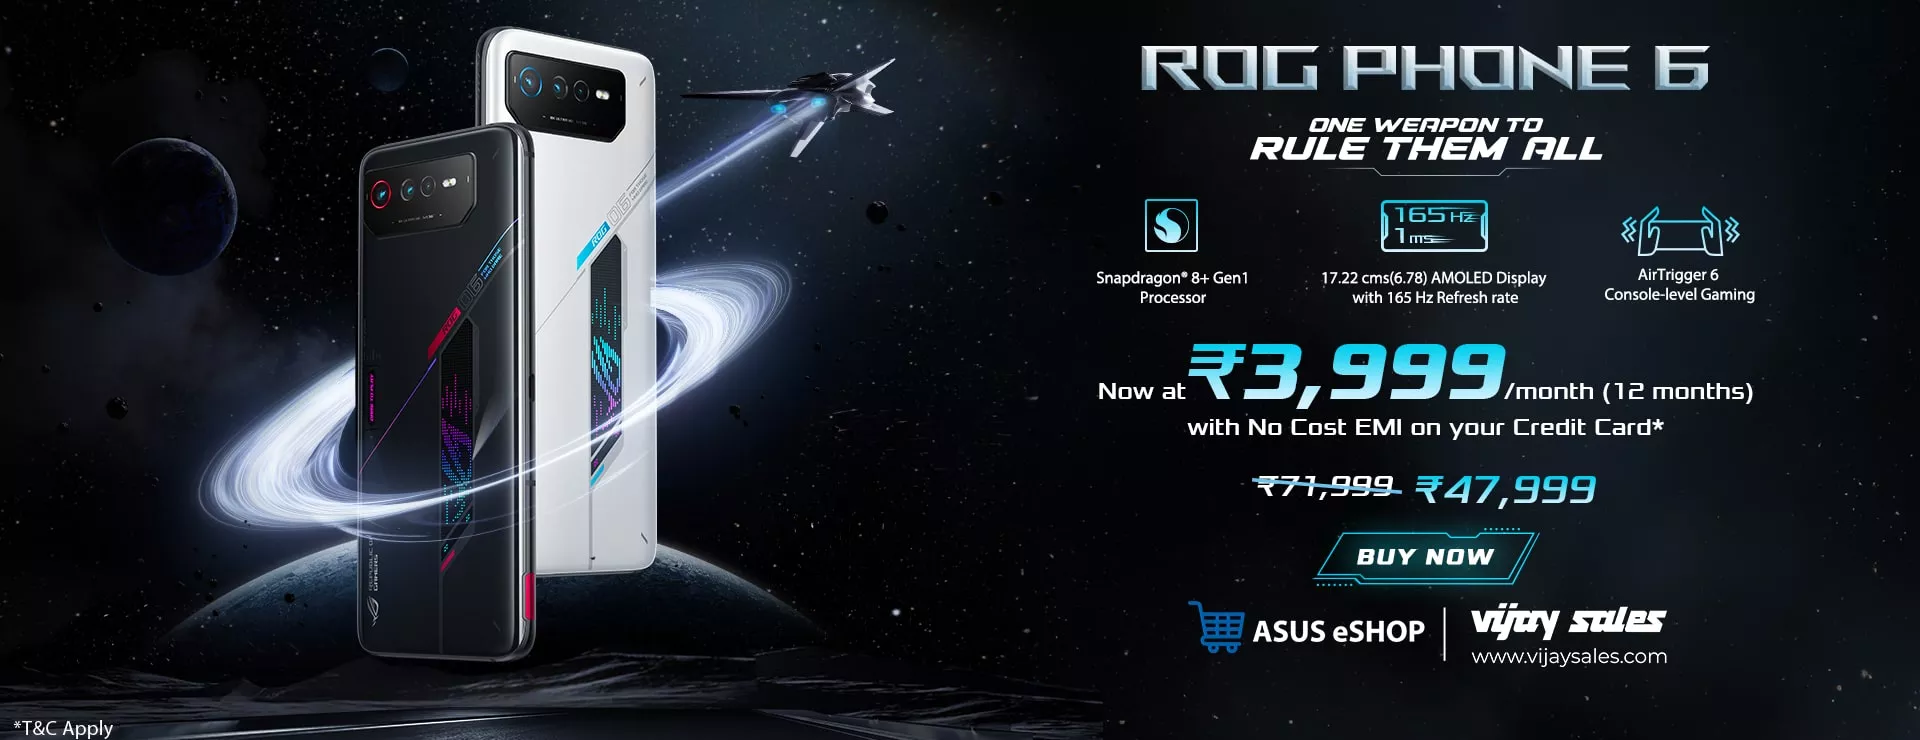 ROG Phone 6 Black Friday Sale